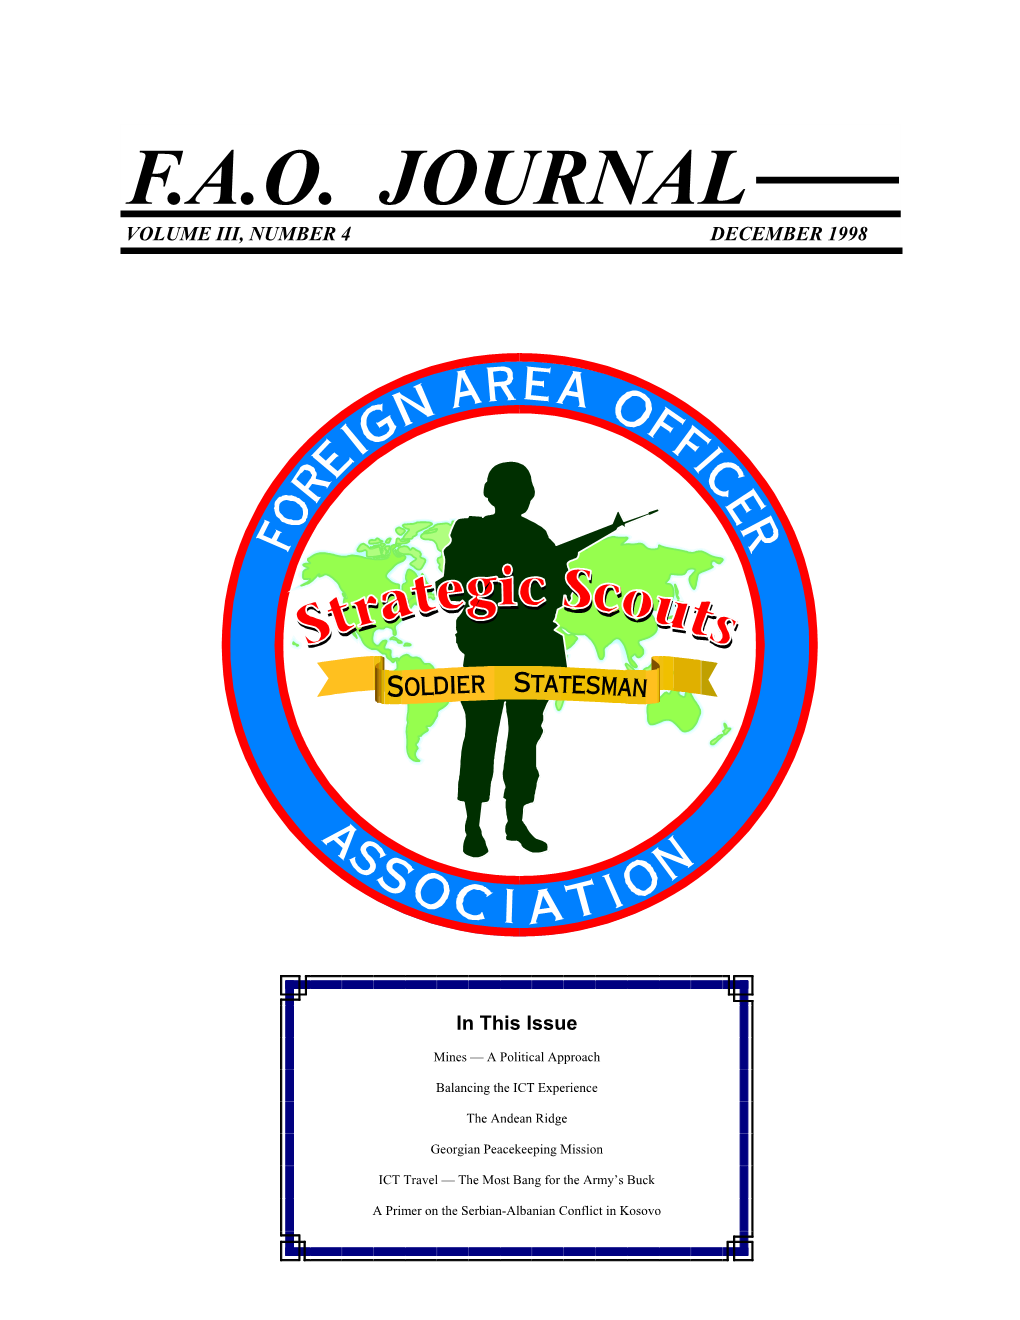 F.A.O. Journal Volume Iii, Number 4 December 1998